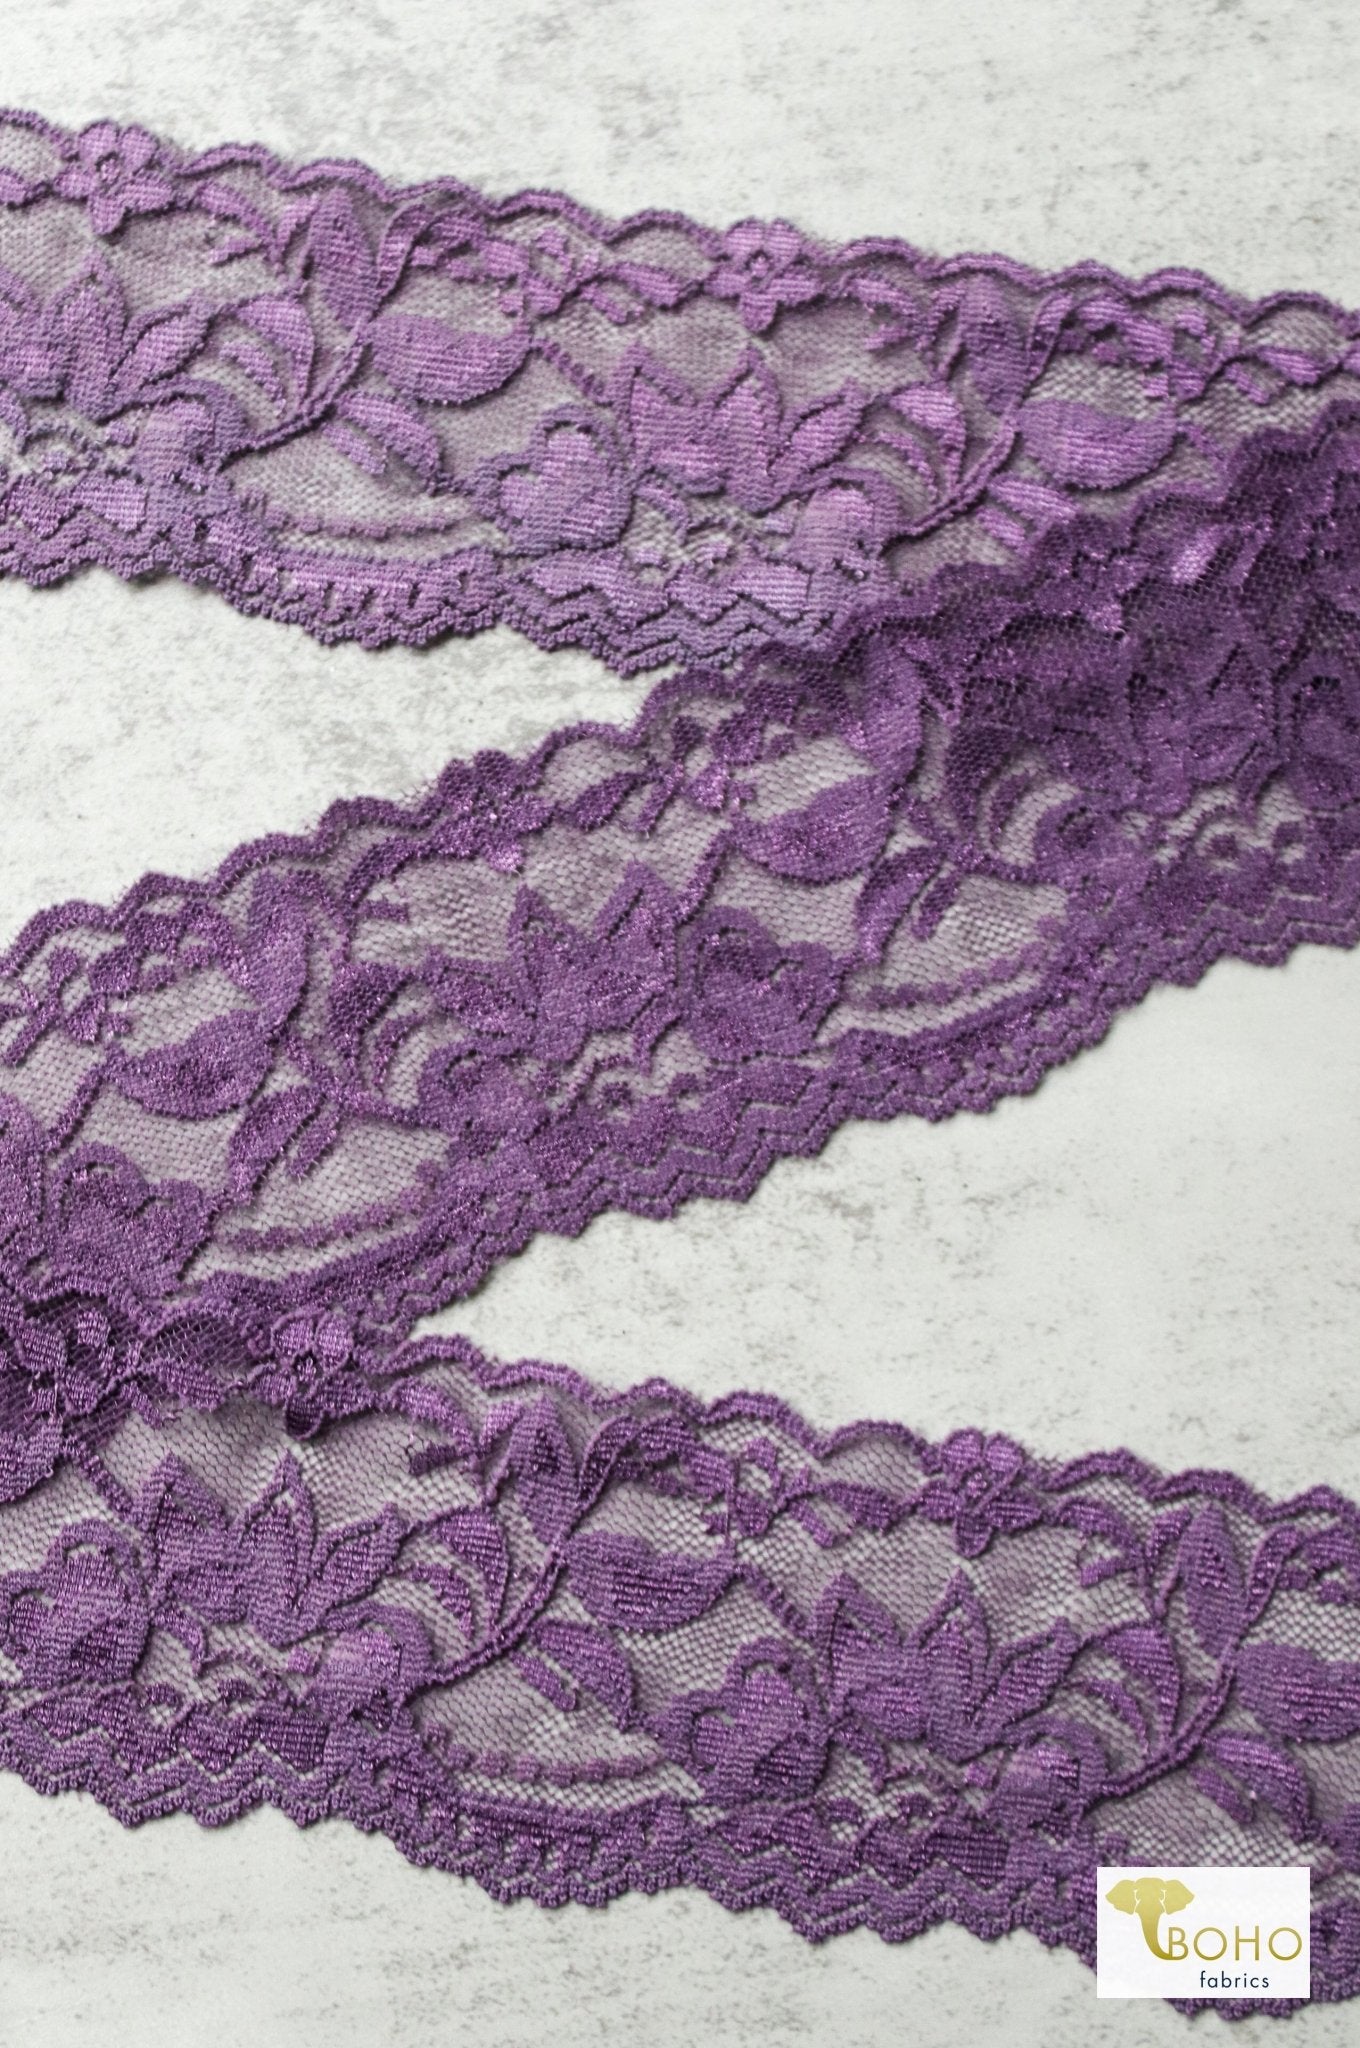 2.25" Dahlia Purple Florals, Stretch Lace Trim SOLD PER PACKAGE OF 3 YARDS. - Boho Fabrics